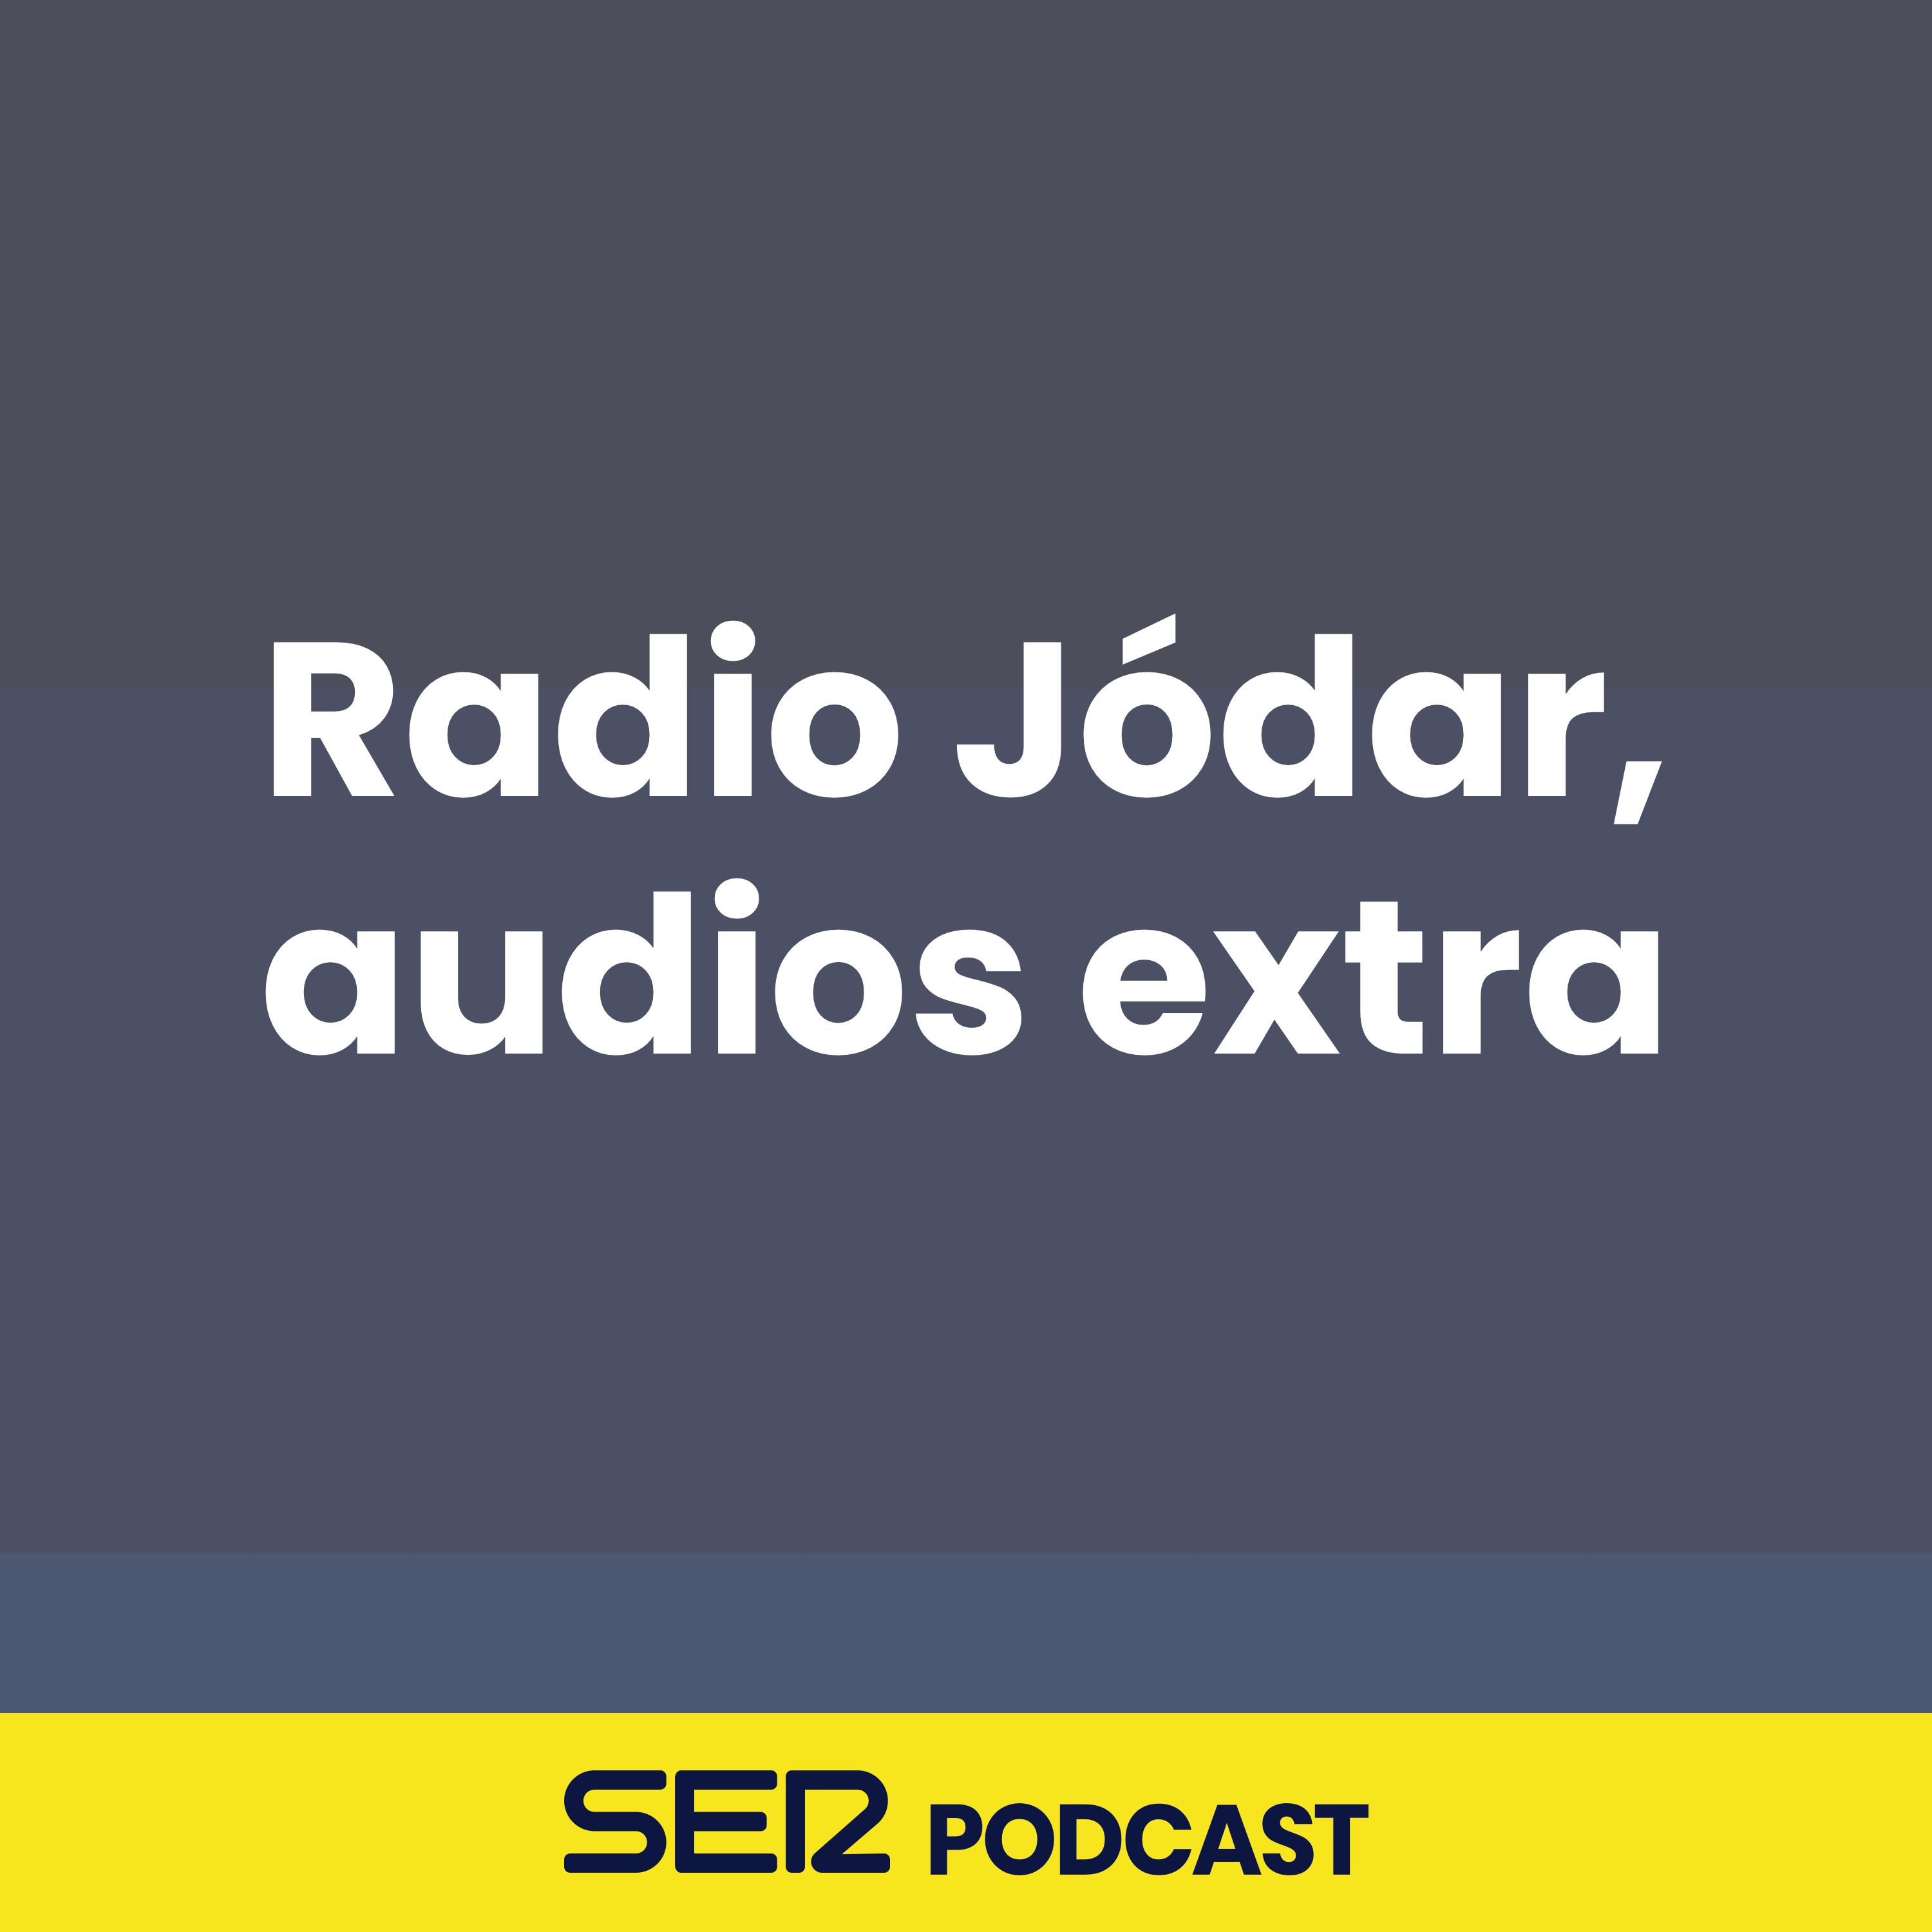 Radio Jódar, audios extra